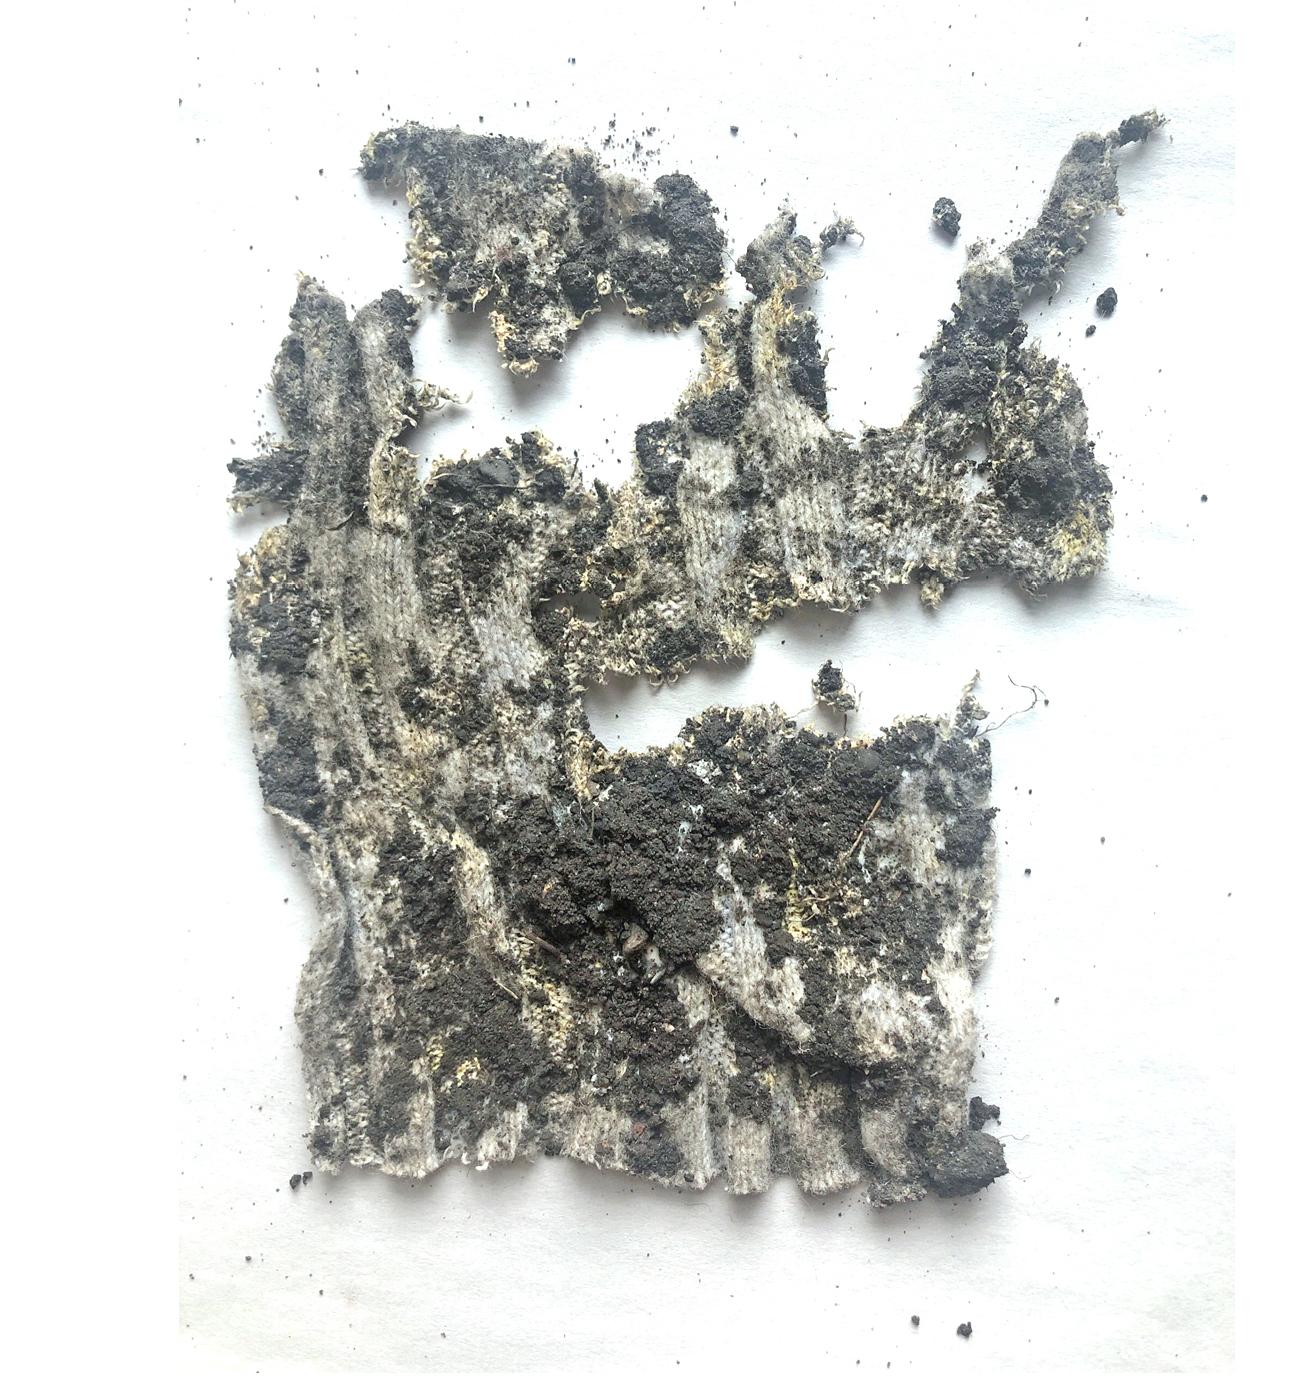 LDAR_Fengjiao_Ge_3-Fabric-biodegradability-experiment_2.jpg 